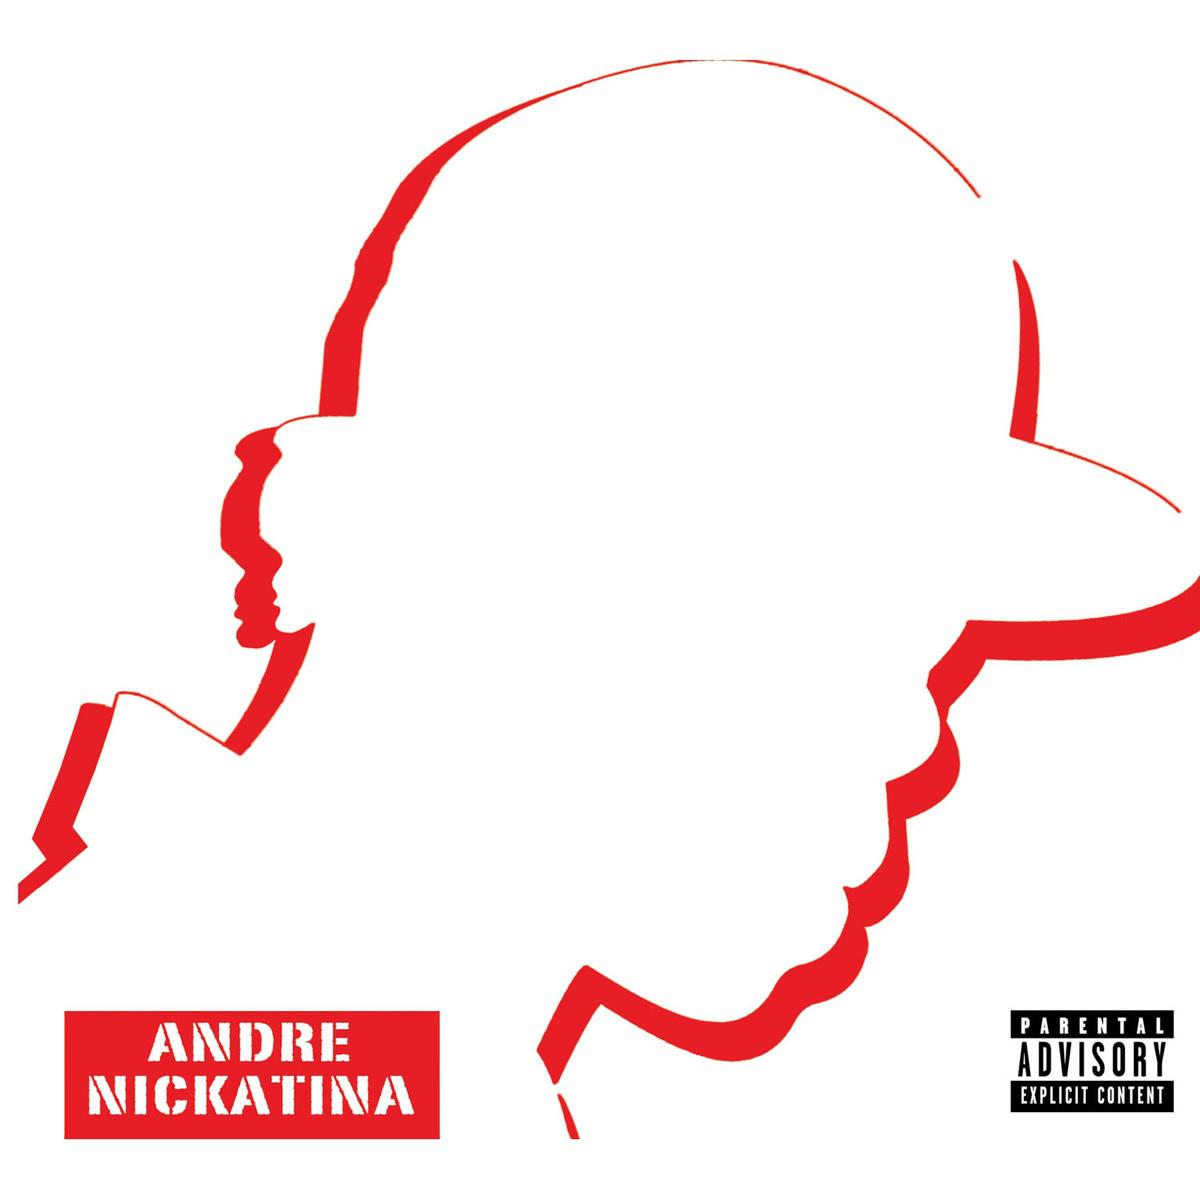 Jelly歌词 歌手Andre Nickatina / Problem-专辑Andre Nickatina-单曲《Jelly》LRC歌词下载